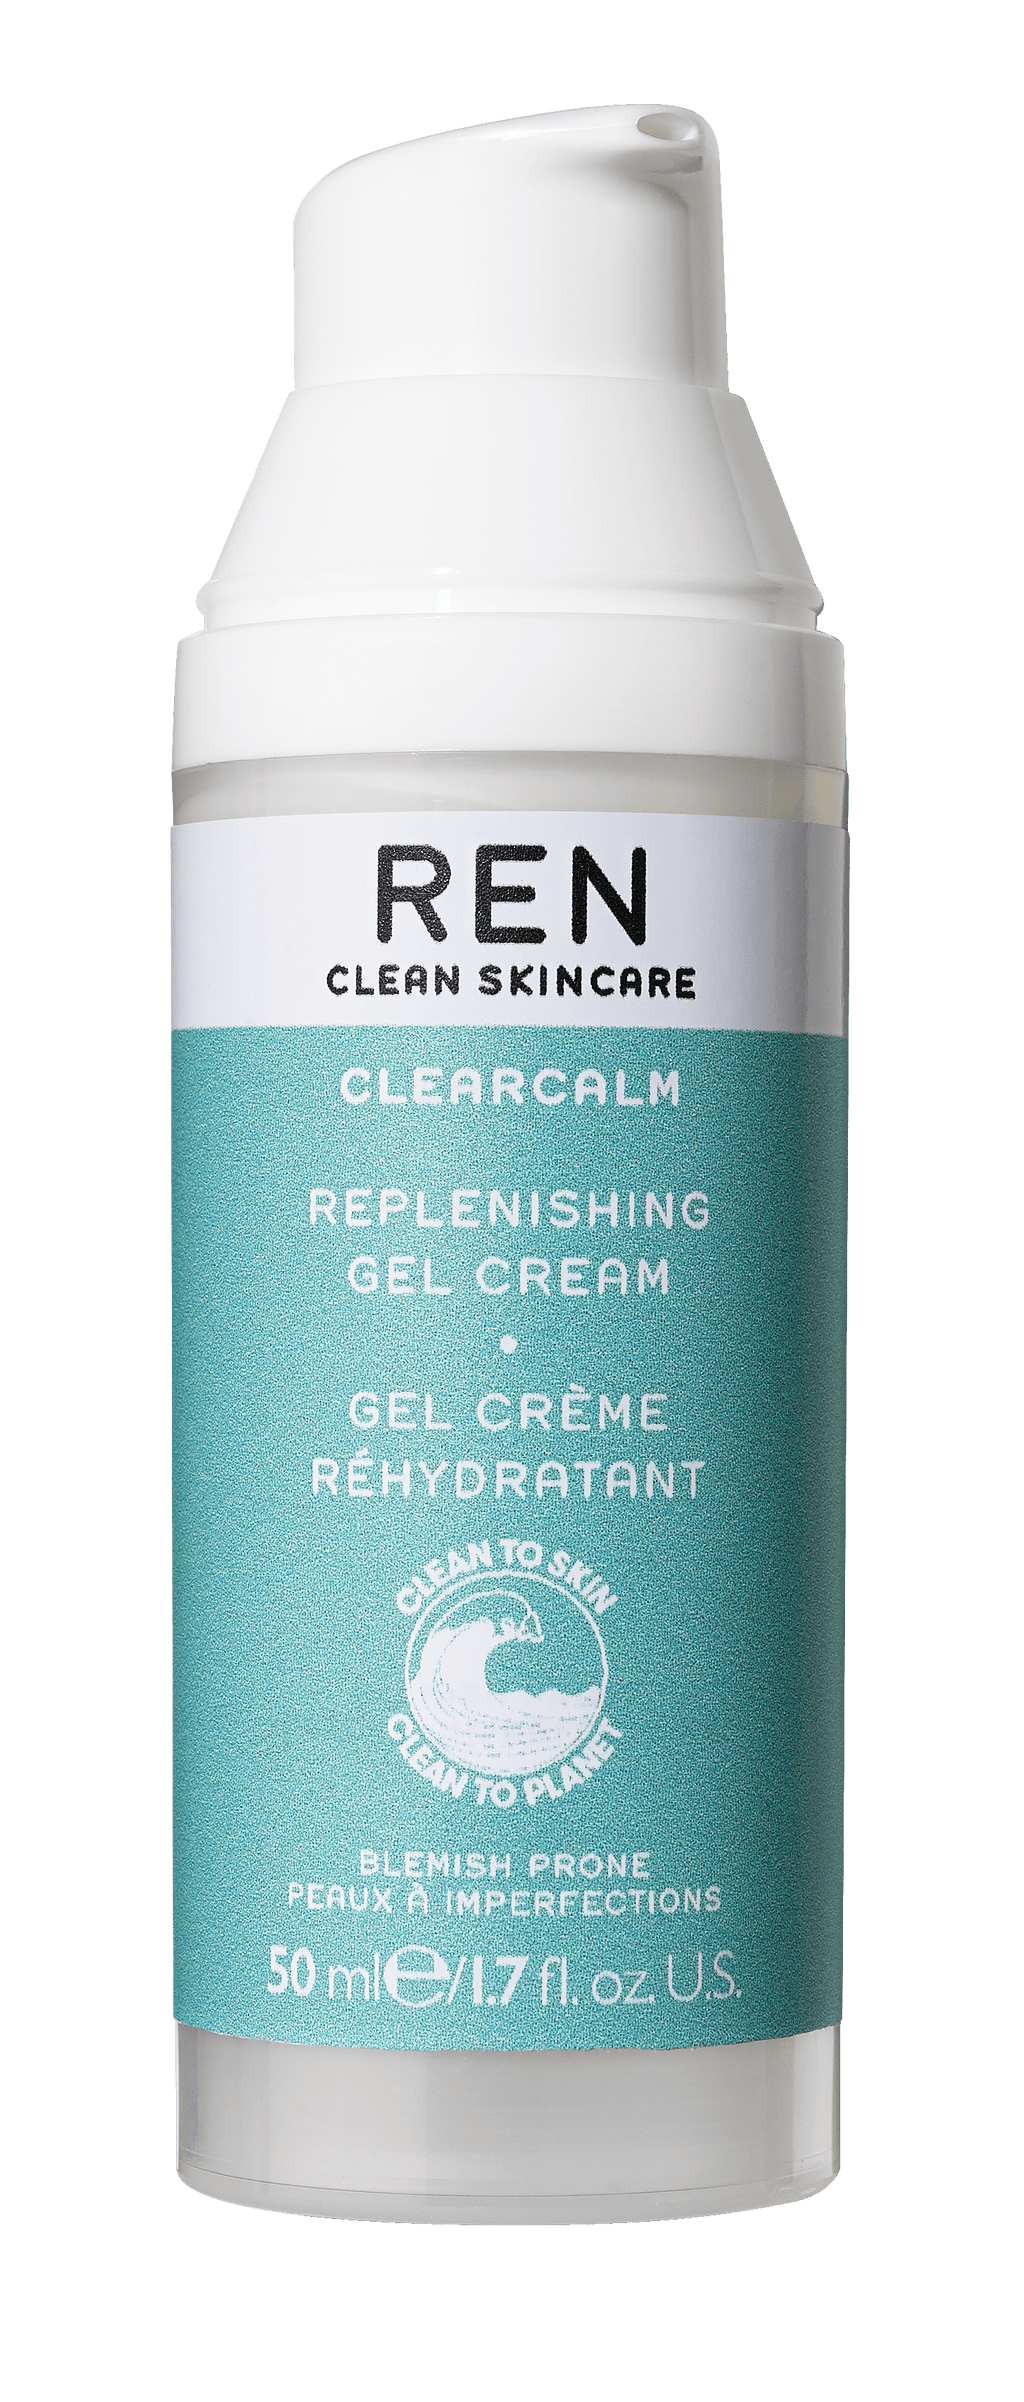 REN - Replenishing gel cream - The Natural Beauty Club